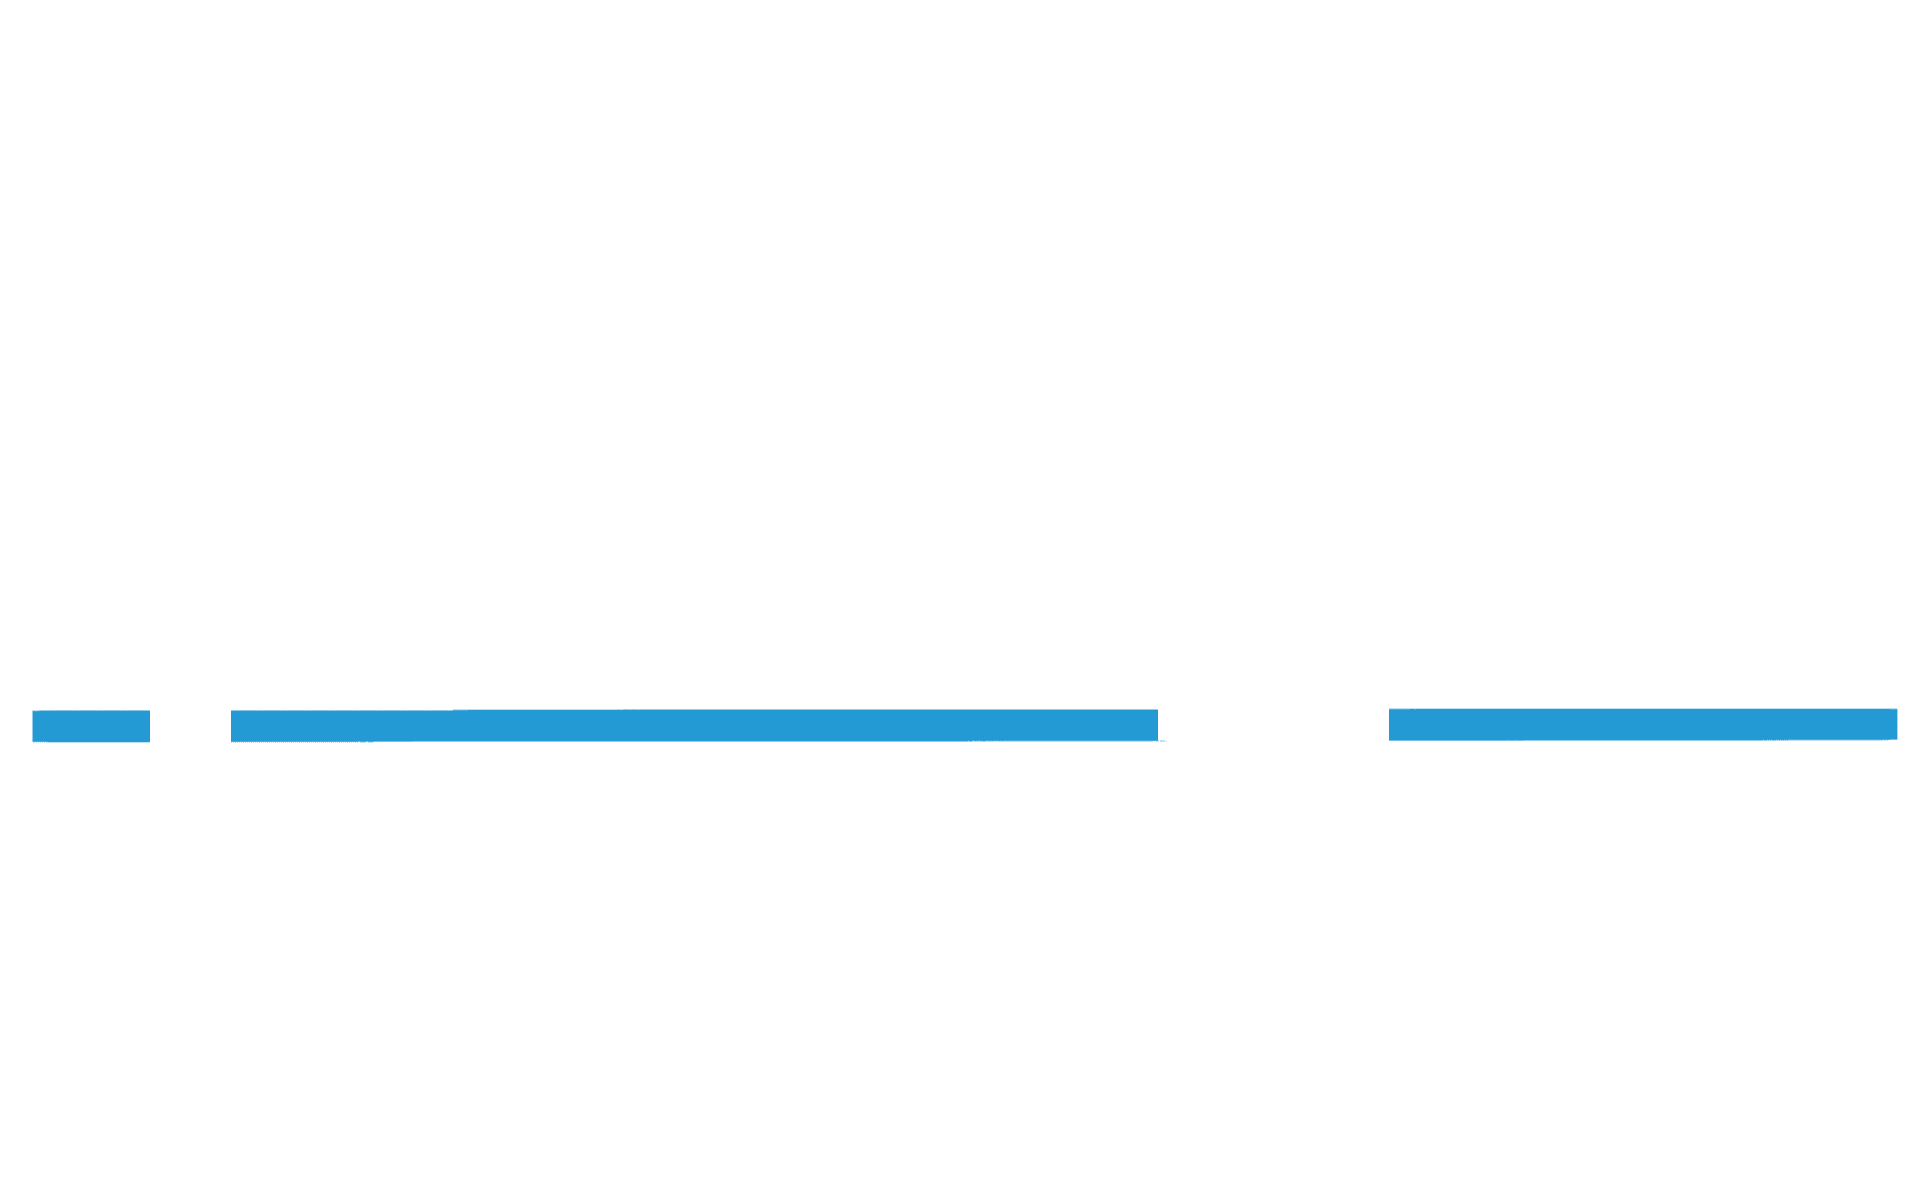 A&G Auto Spa Logo